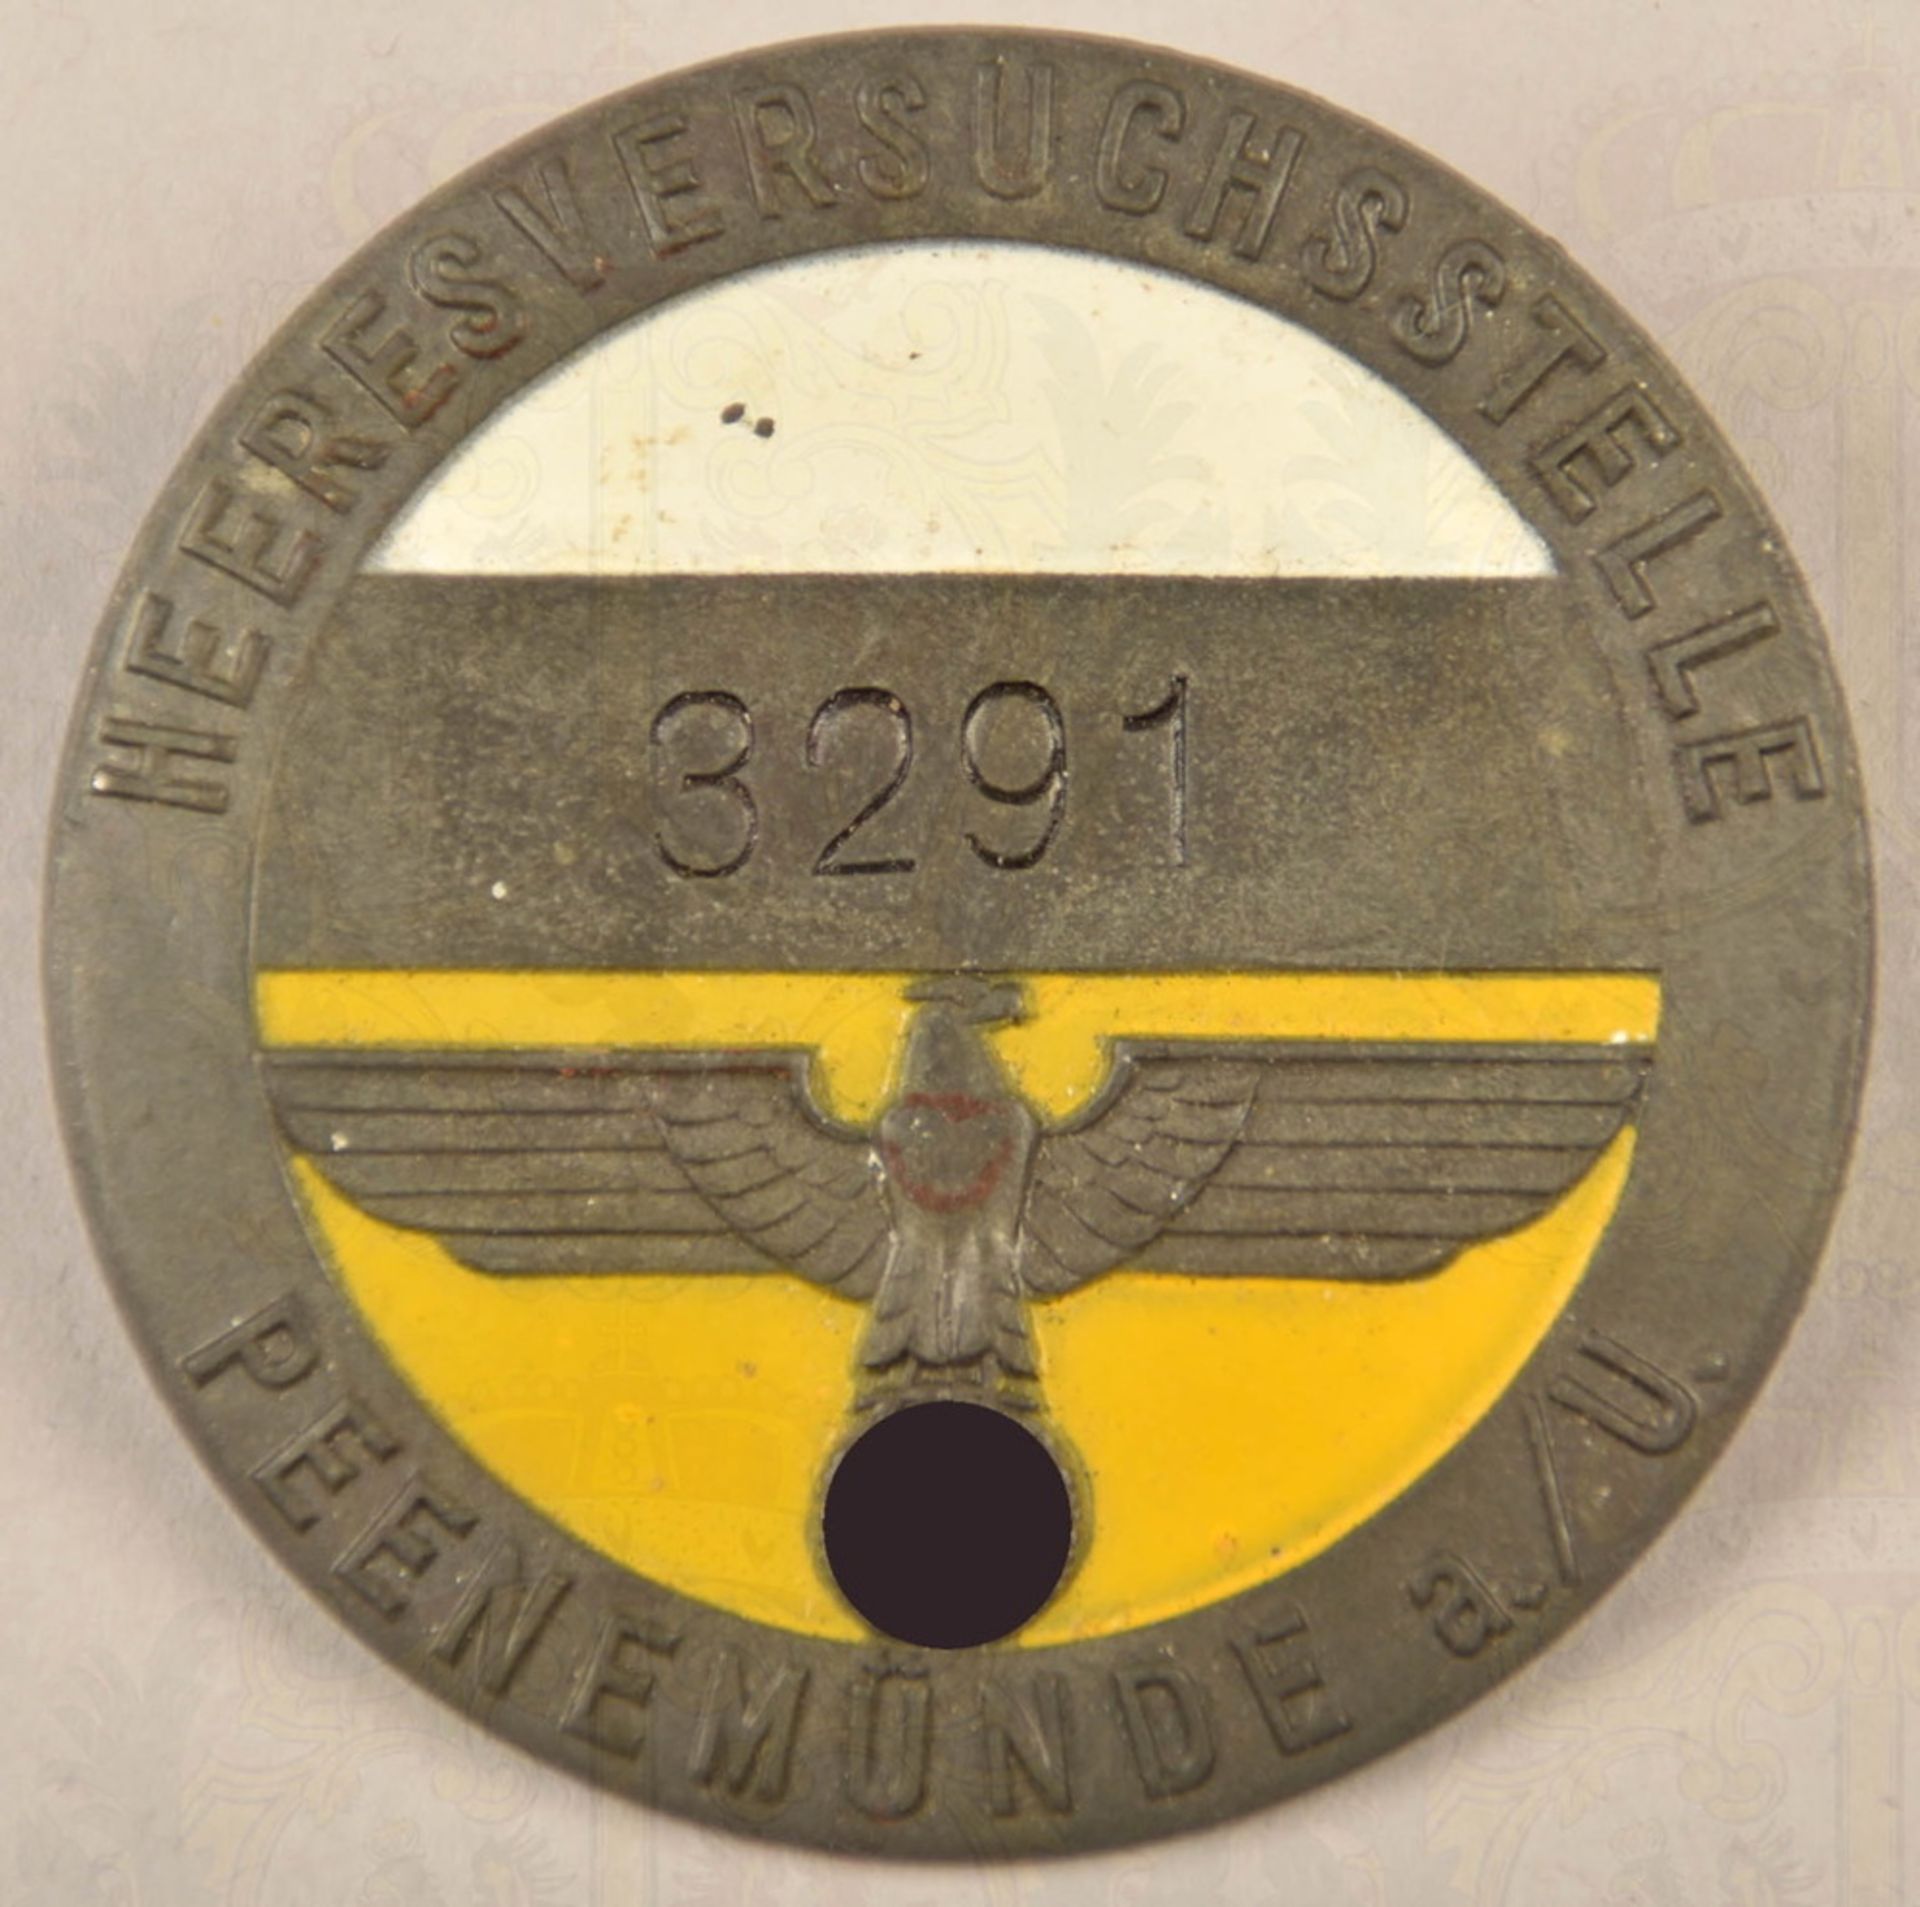 Service badge of the Peenemünde V2 rocket firing range